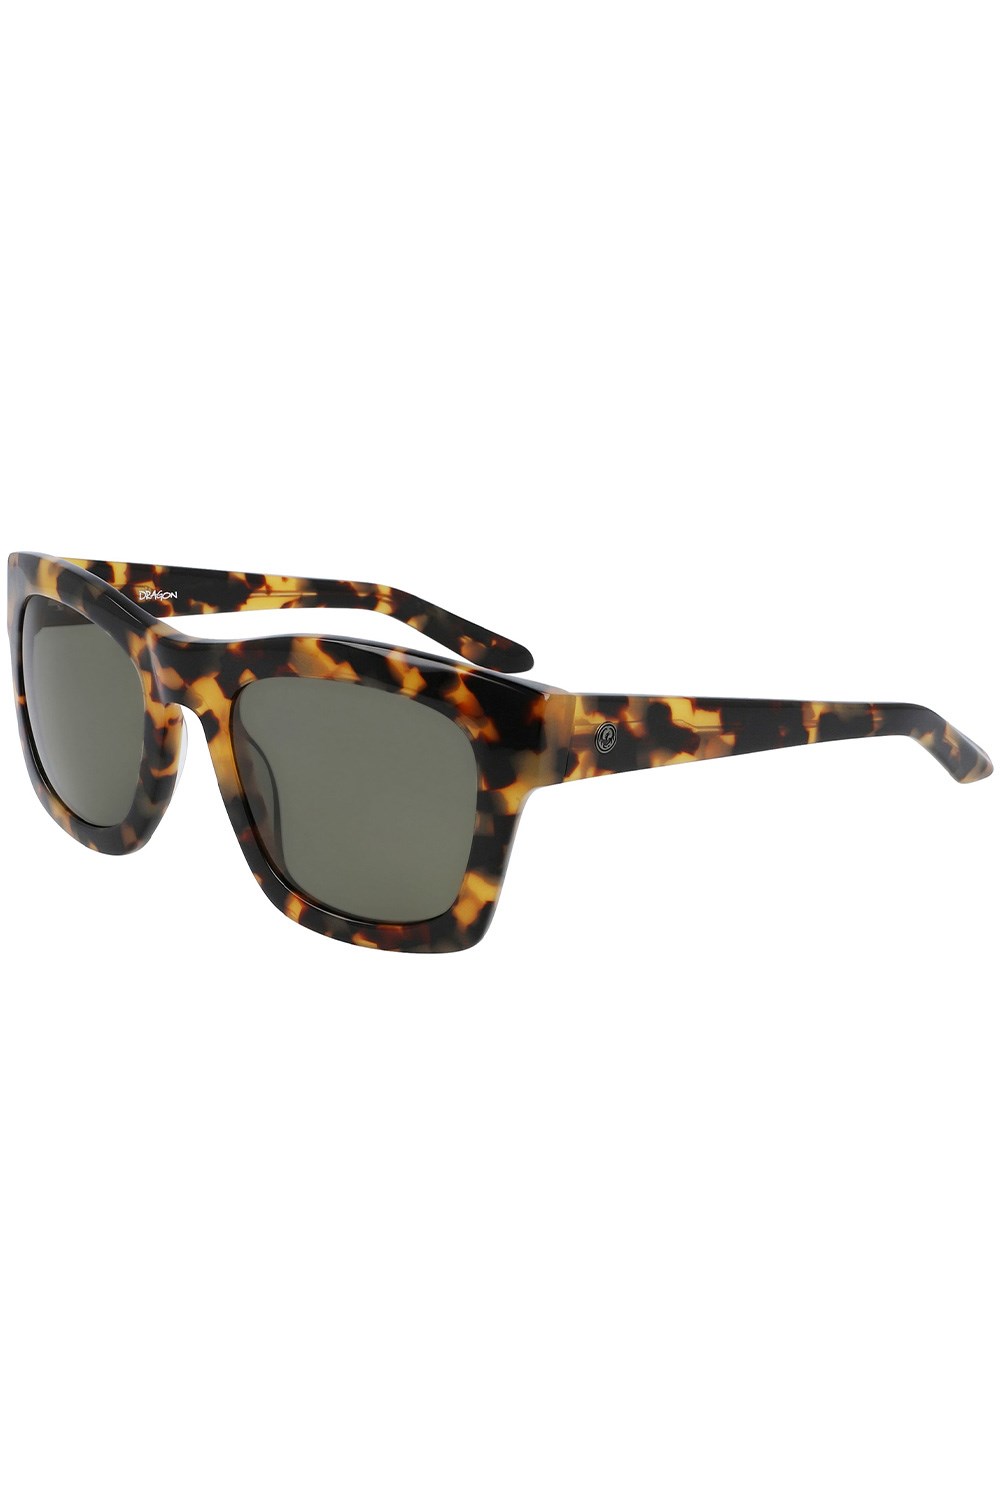 Waverly Womens Sunglasses -